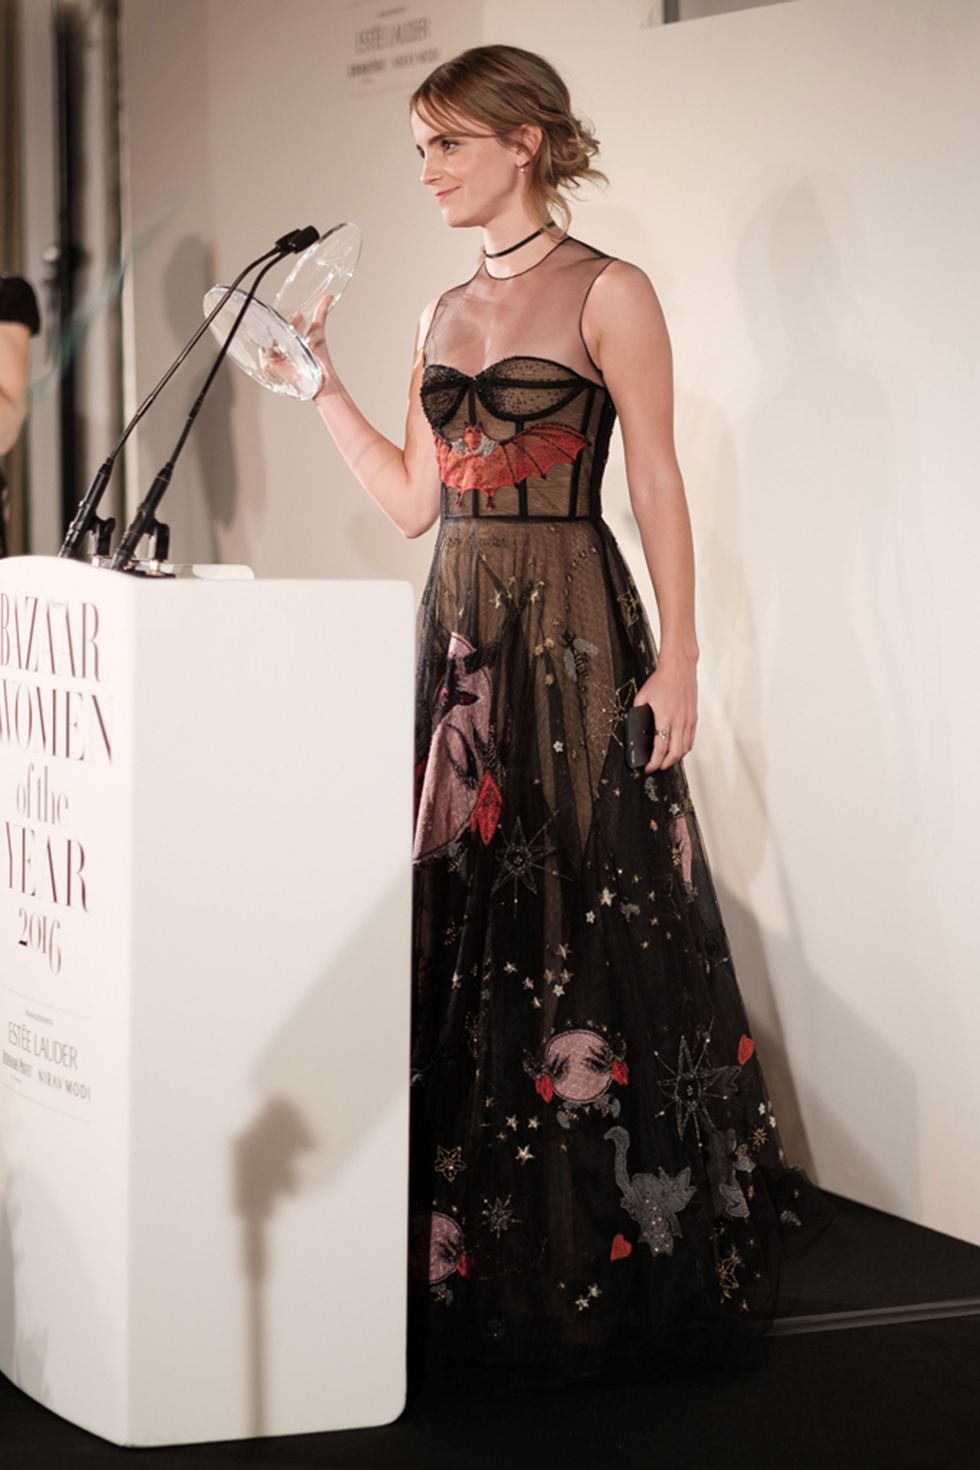 Emma Watson's speech at the Harper's Bazaar Women of the Year Awards 2016